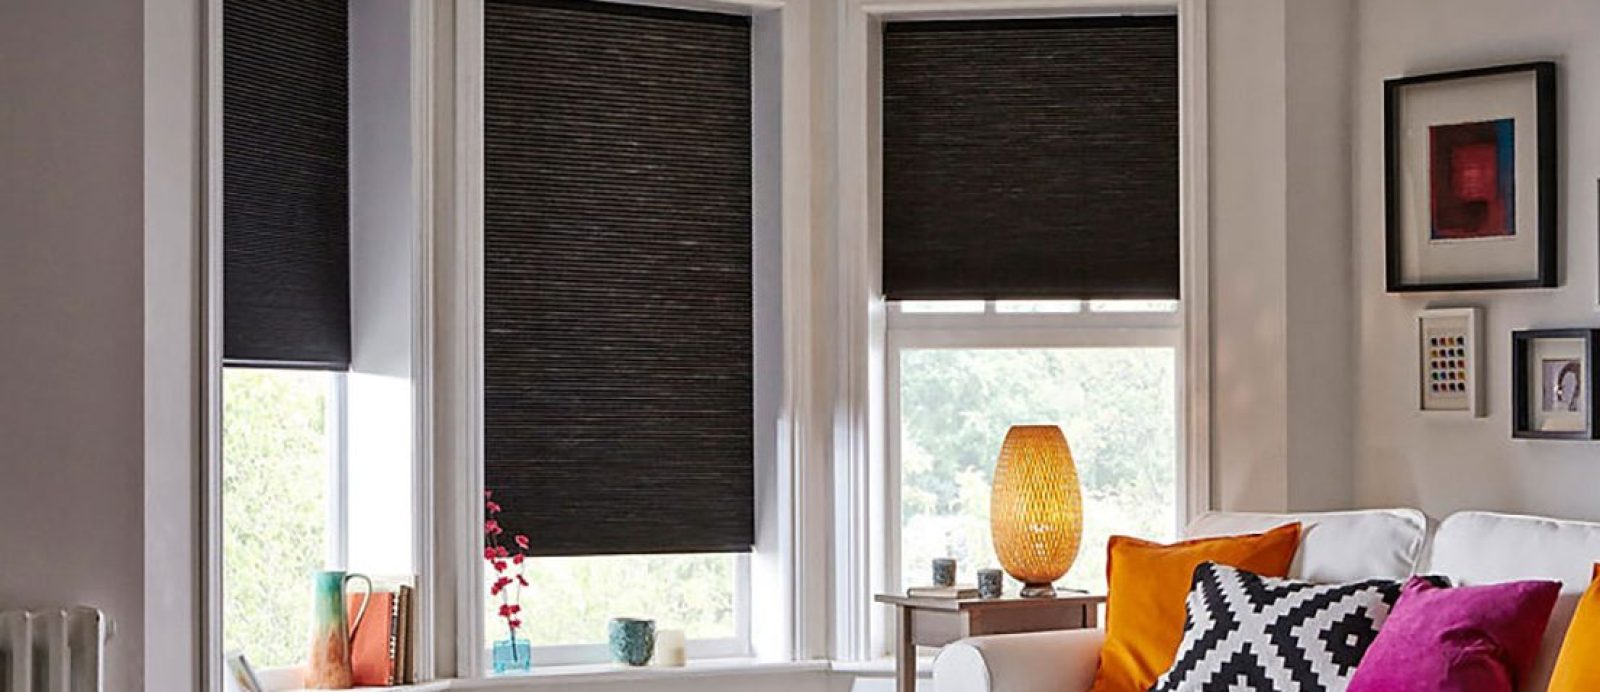 Honeycomb blinds